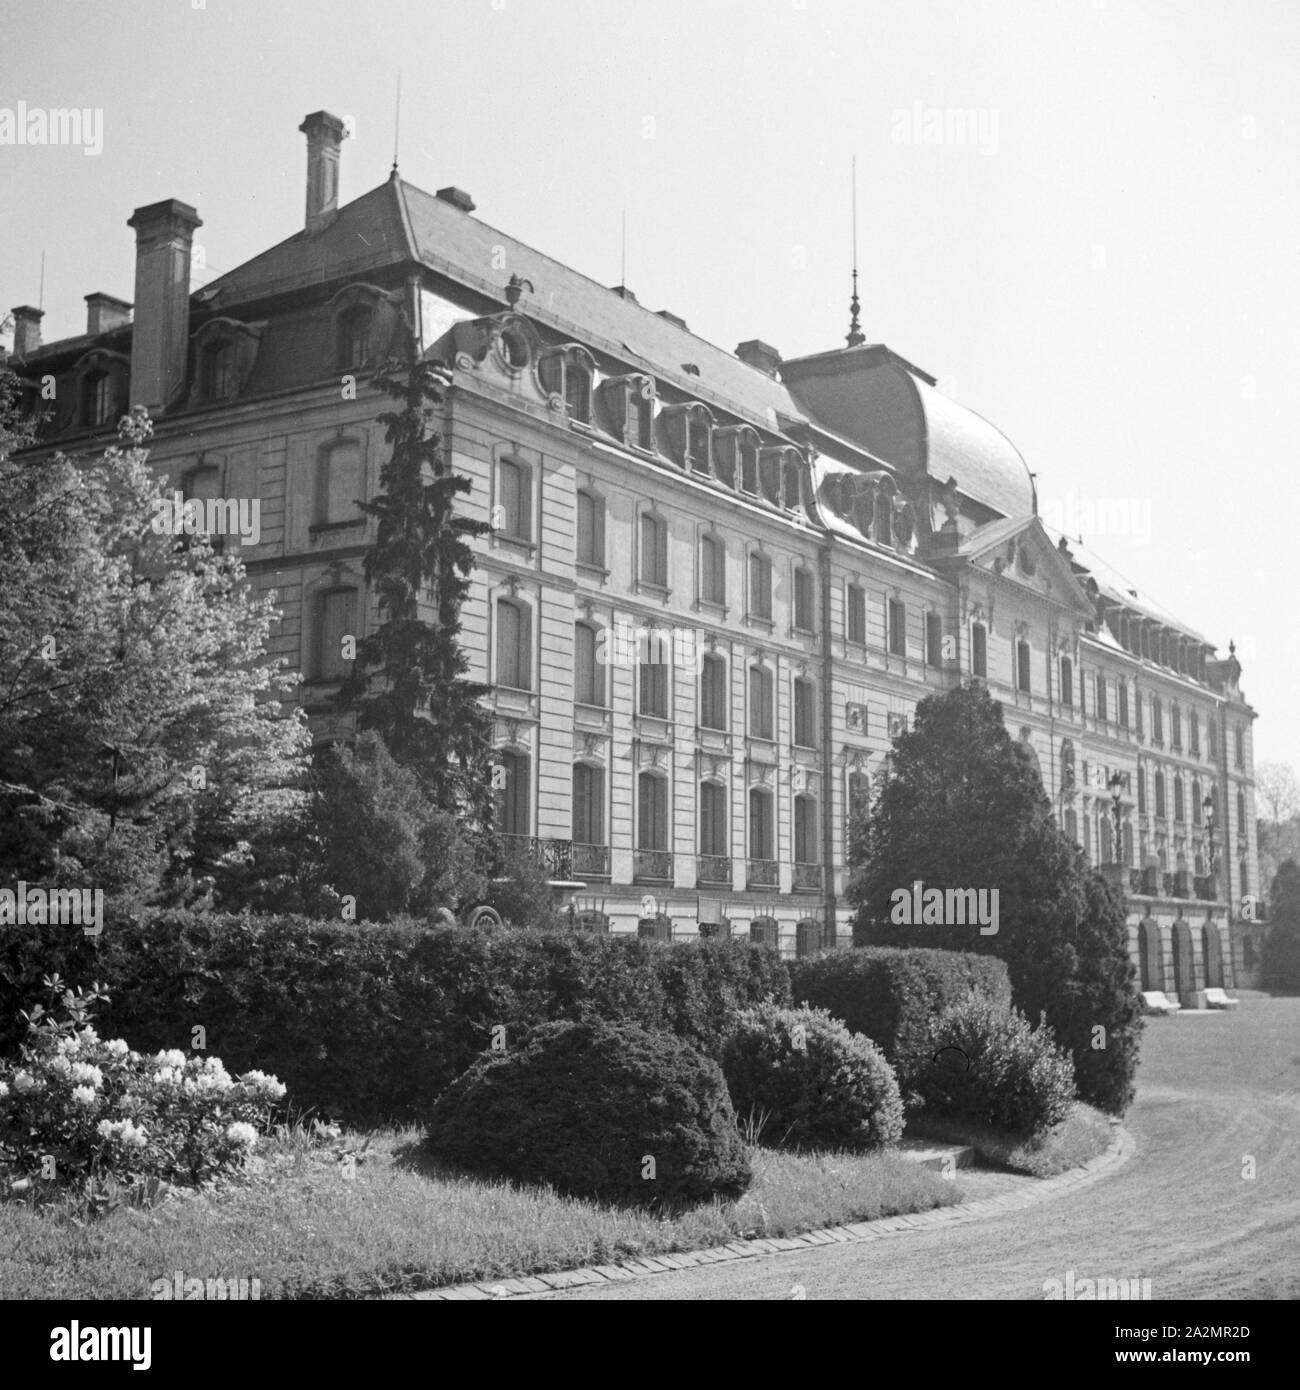 Das Schloss in Donaueschingen, Deutschland 1930er Jahre. Donaueschingen castle, Germany 1930s. Stock Photo